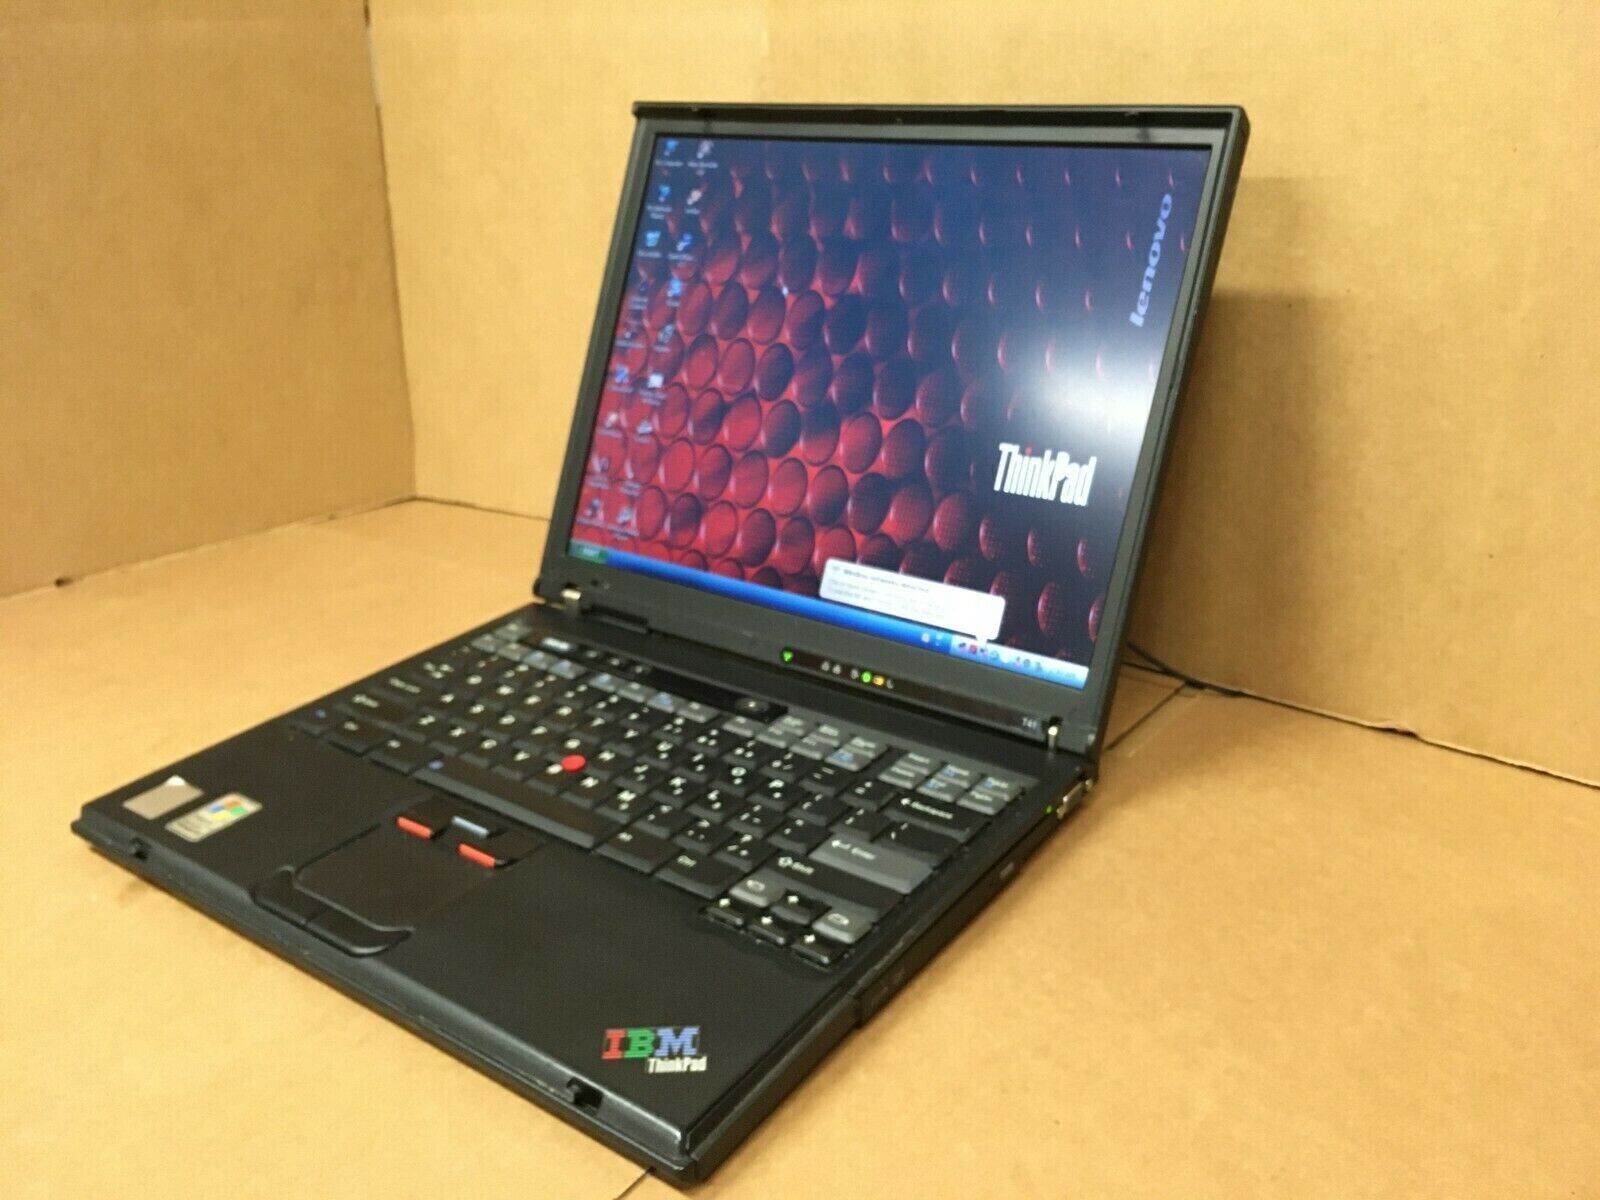 IBM THINKPAD T41 Vintage Laptop 1.60GHz 1GB RAM 60GB HDD WINDOWS XP SP3 ATI 9000